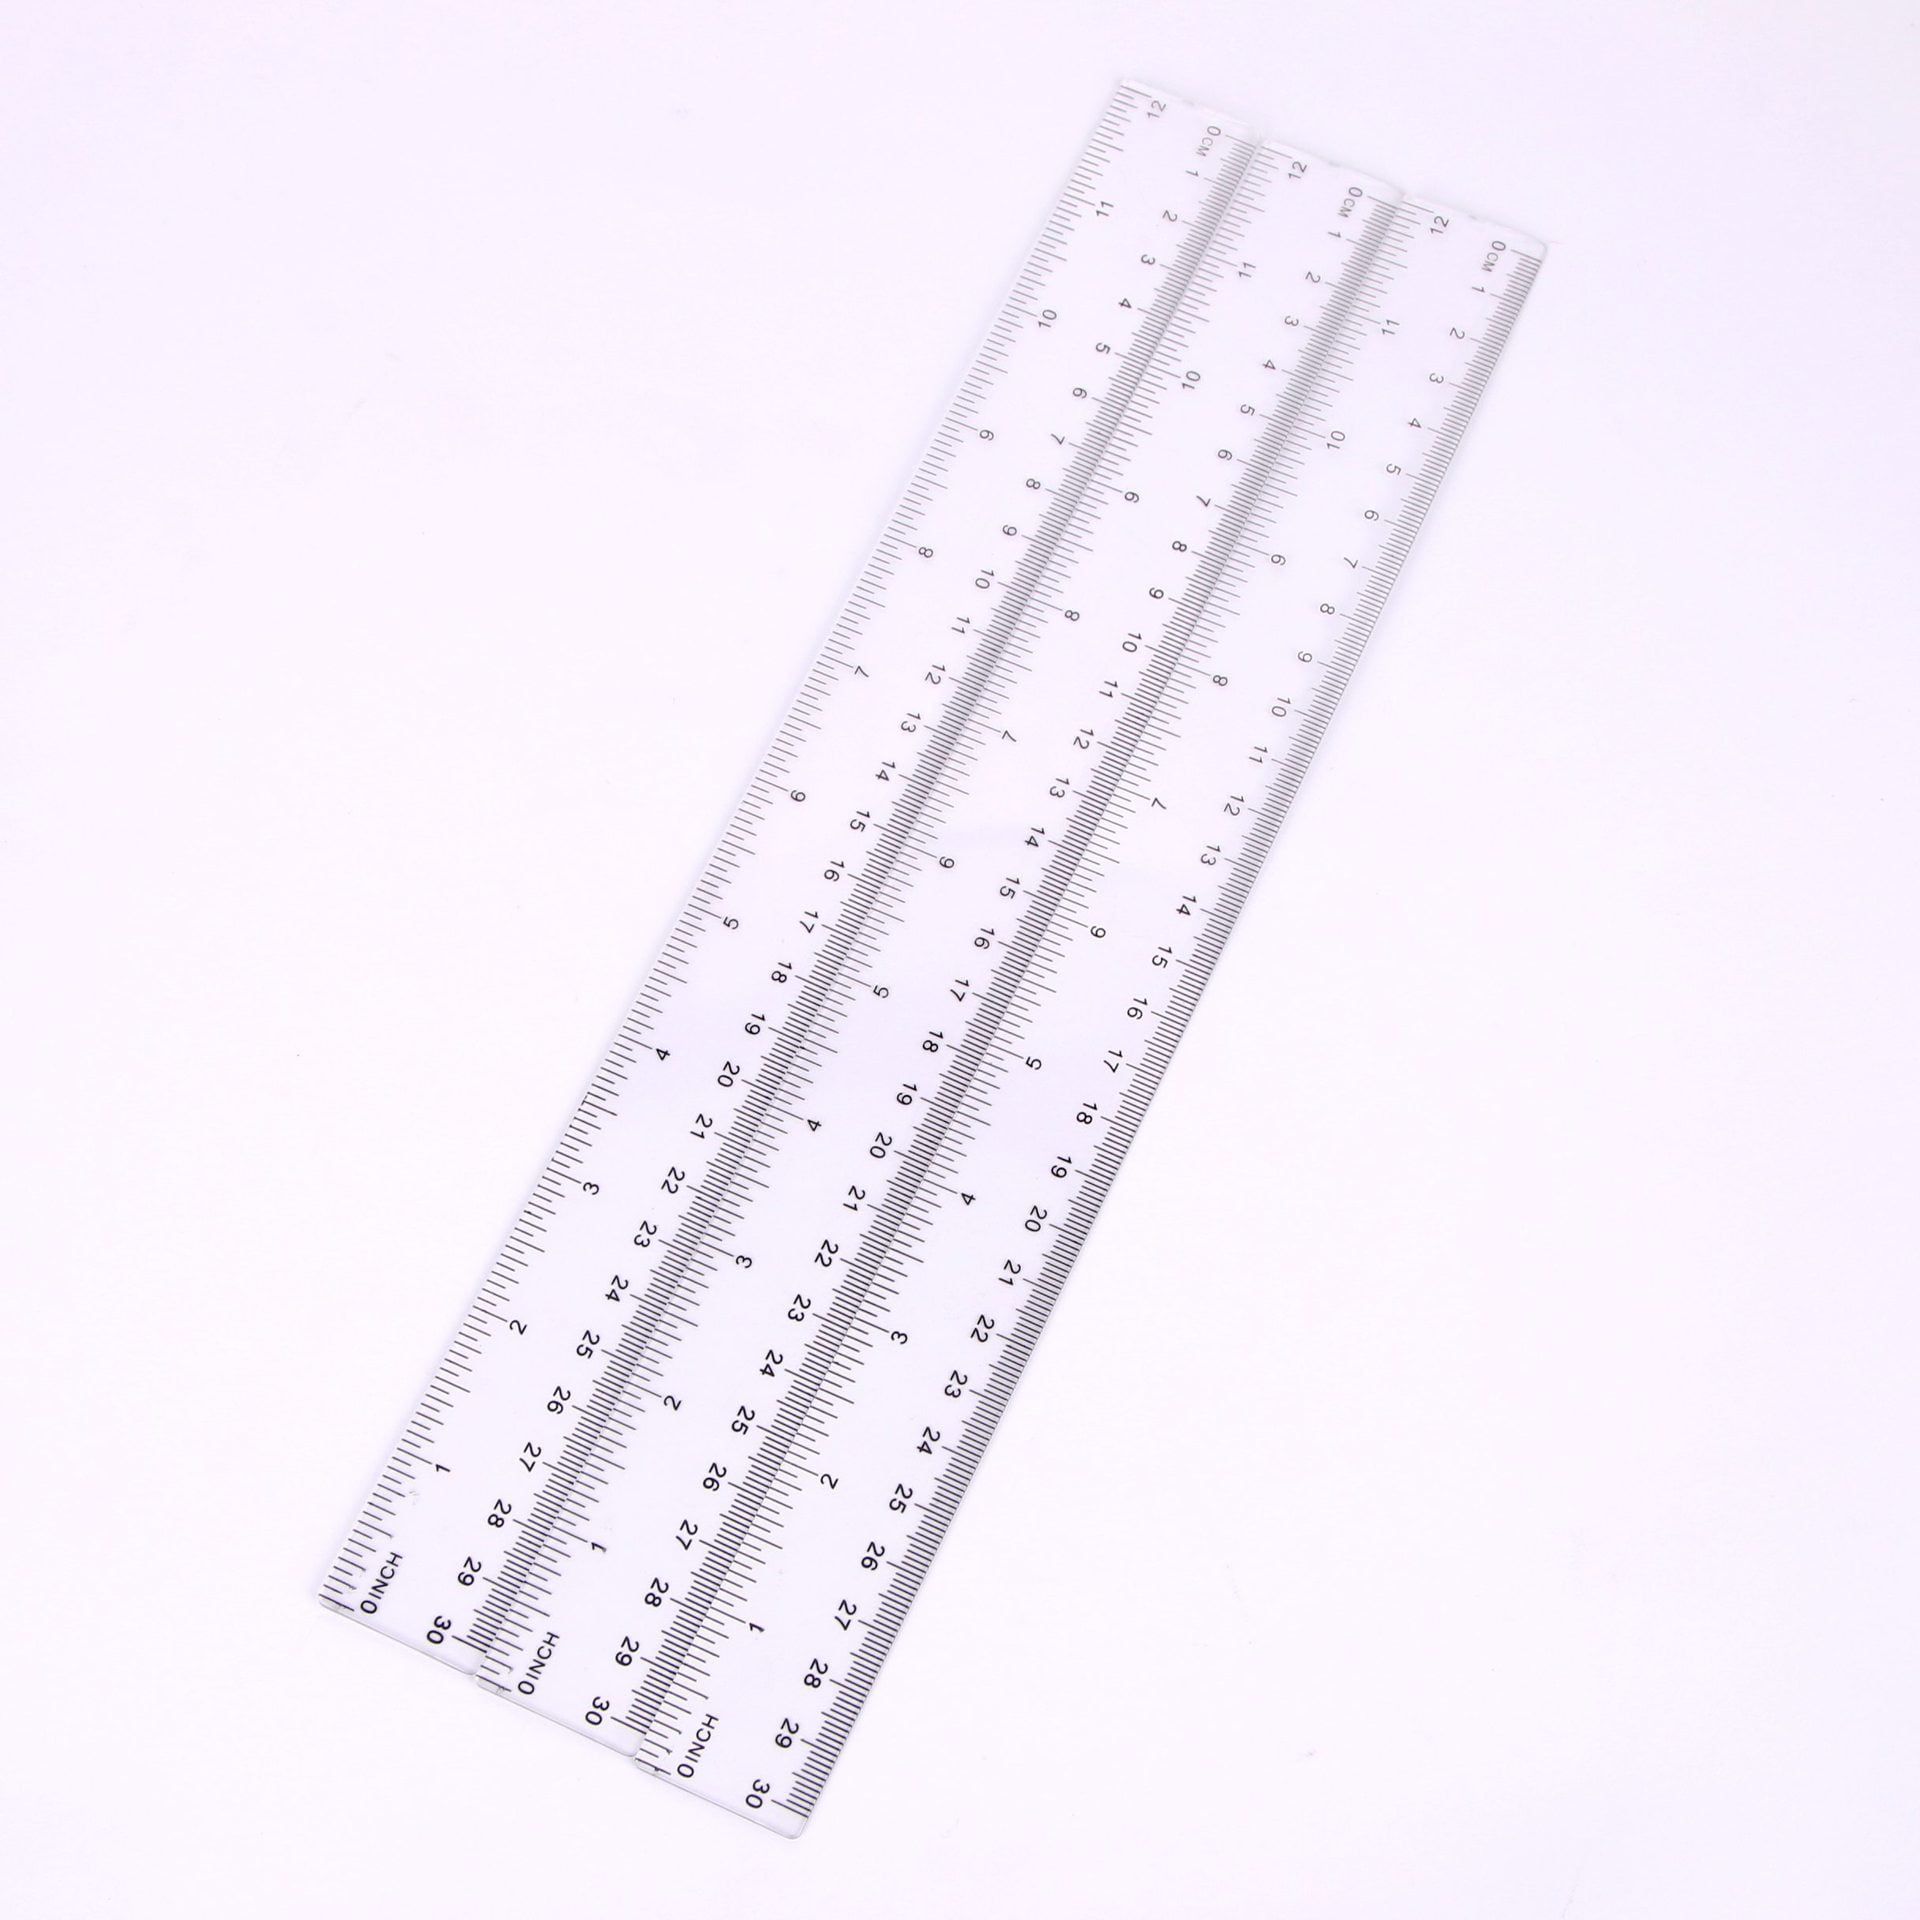 4" Ruler 0-180* Protractor Clear.Set of 12 Plastic "School Smart" 